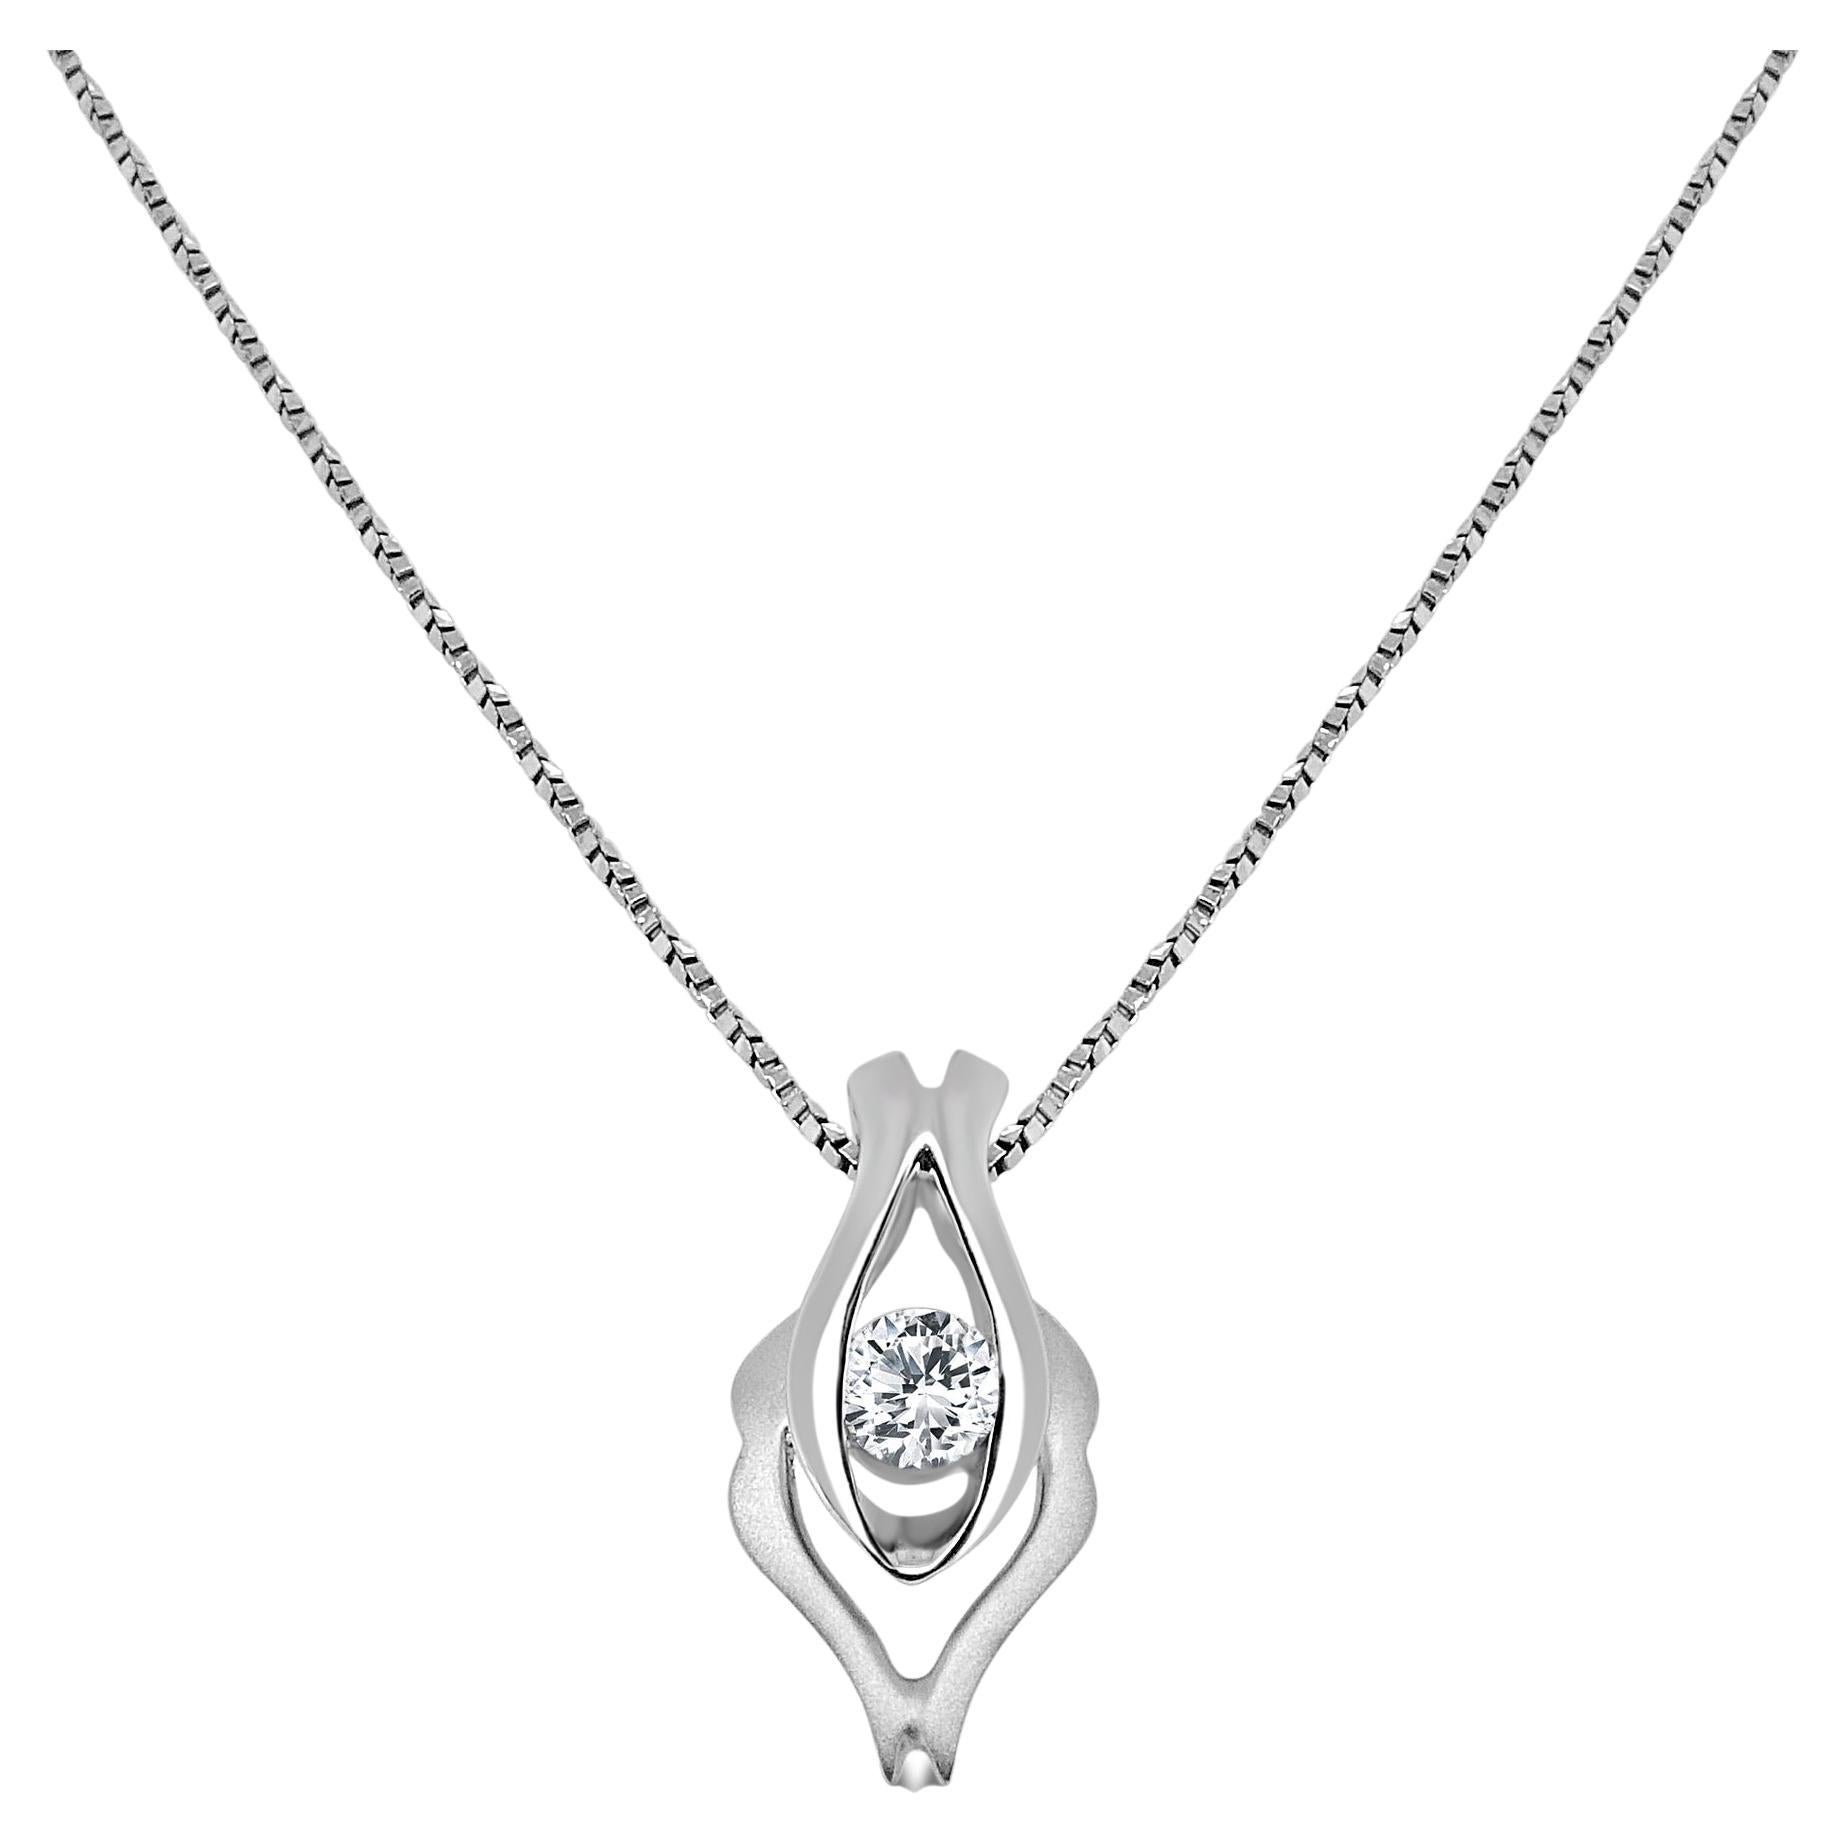 1/6 Carat Diamond Pendant with Chain